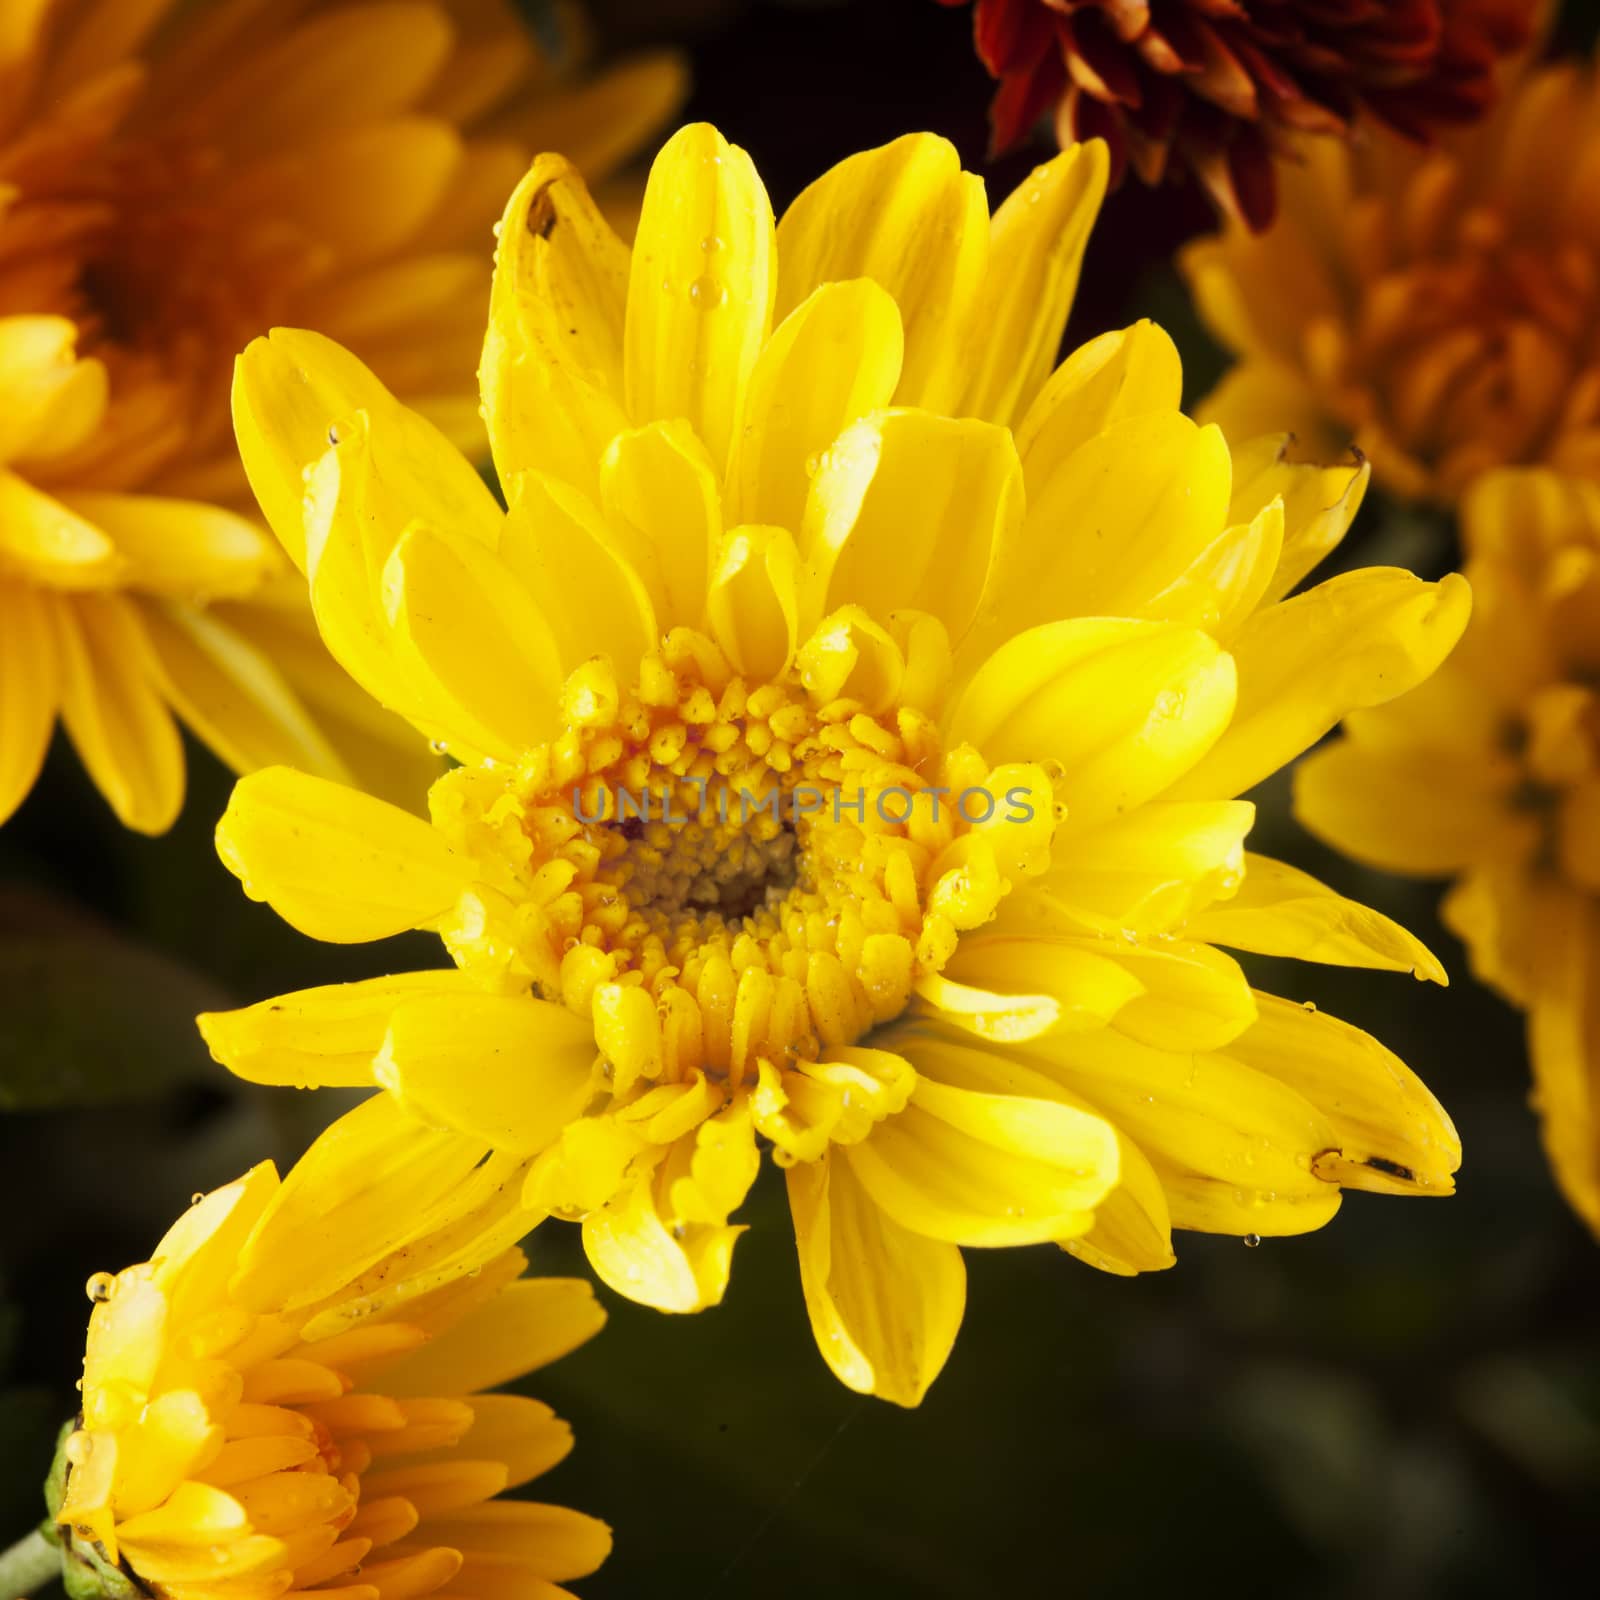 yellow chrysanthemum by Koufax73